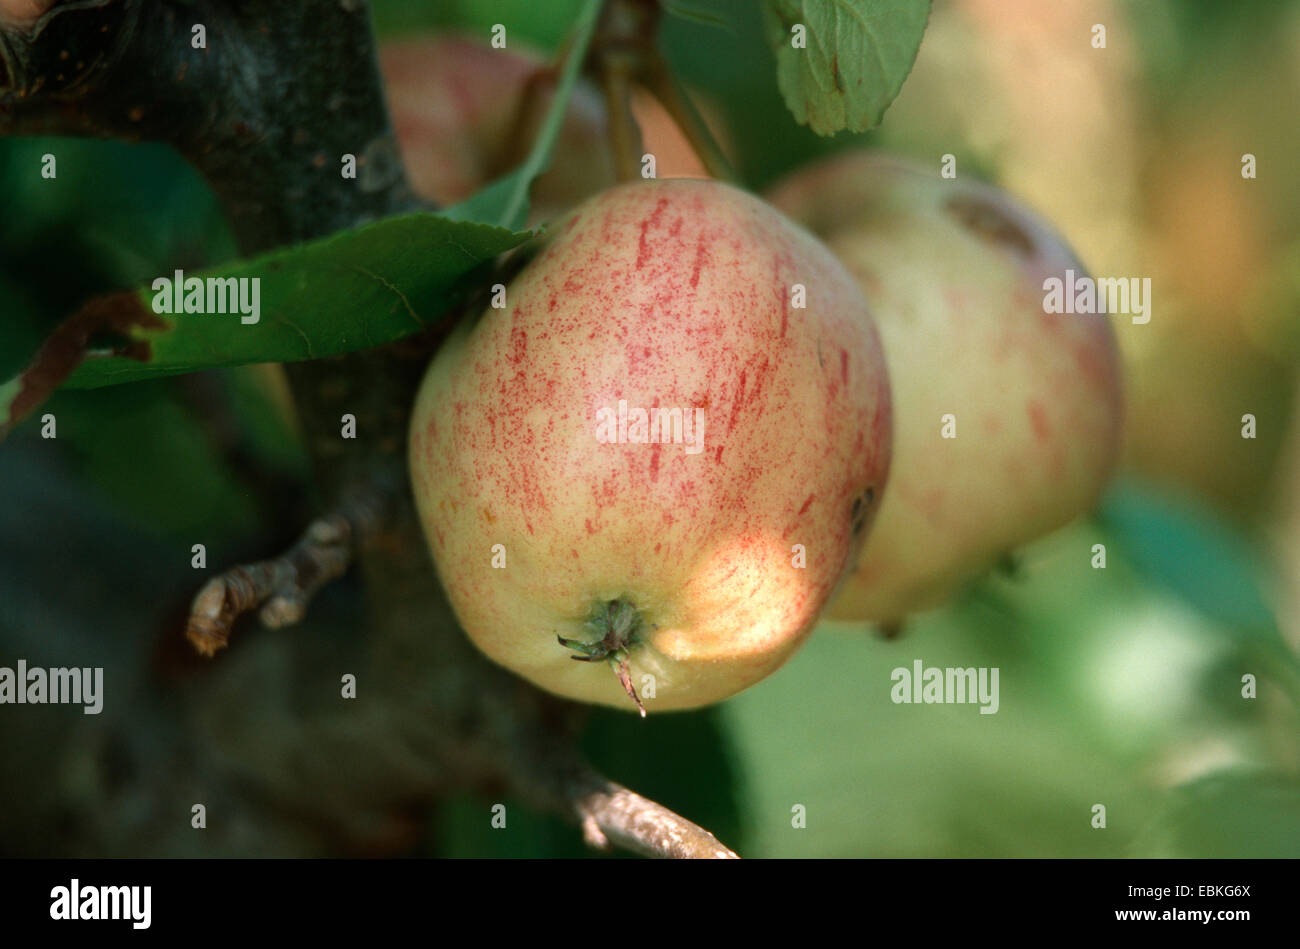 https://c8.alamy.com/comp/EBKG6X/apple-malus-domestica-royal-gala-malus-domestica-royal-gala-cultivar-EBKG6X.jpg